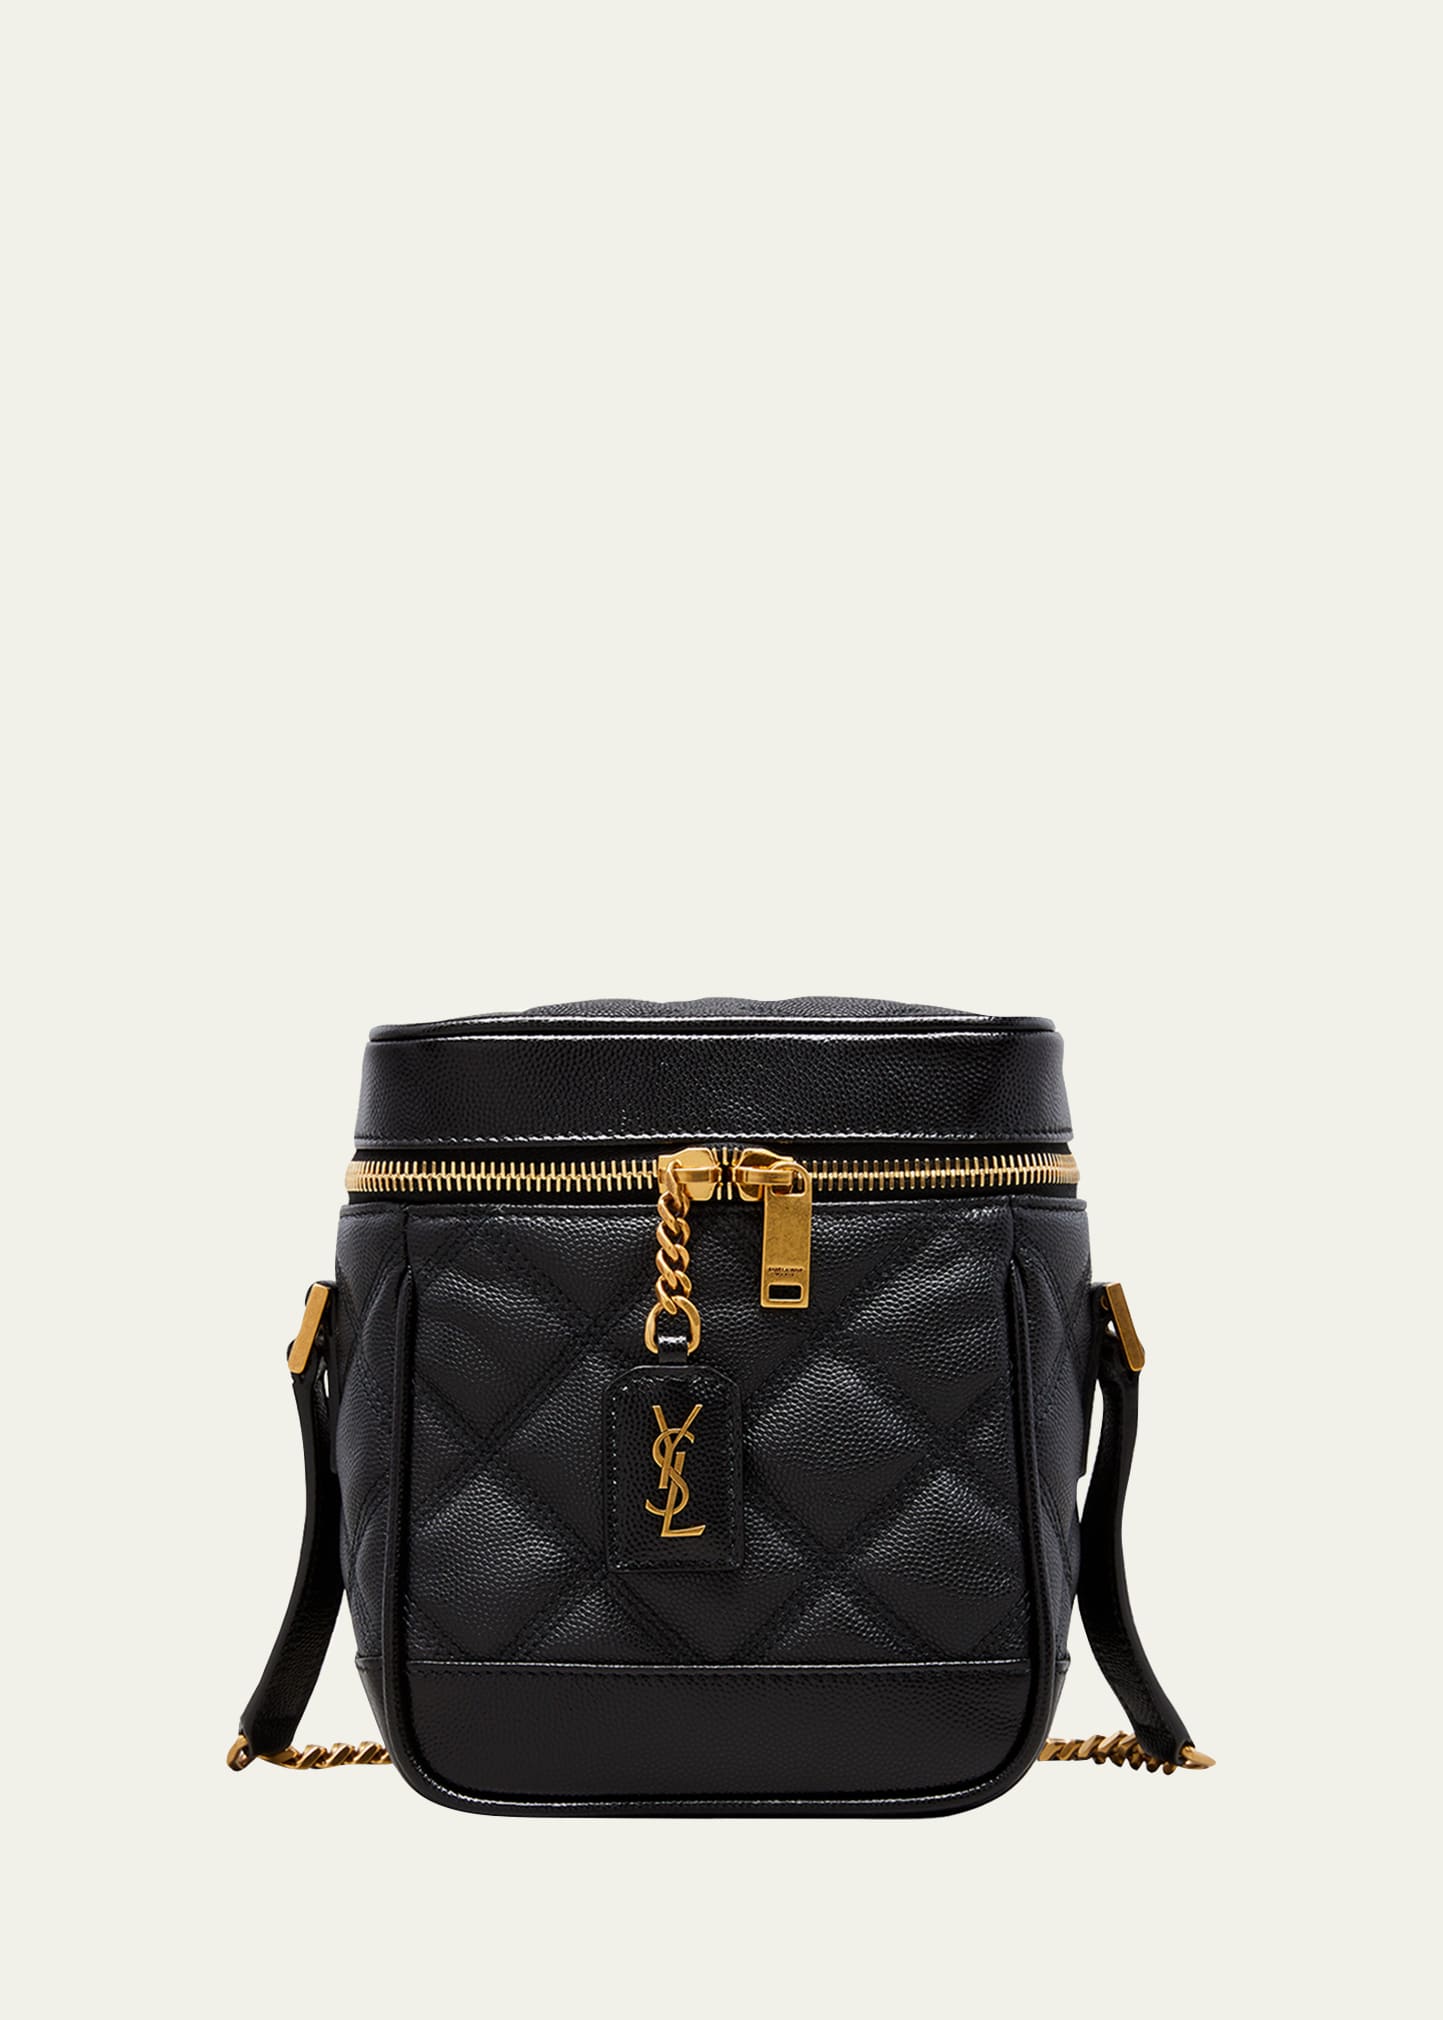 Saint Laurent 80S Vanity YSL Crossbody Bag in Quilted Grained Leather | Bergdorf Goodman